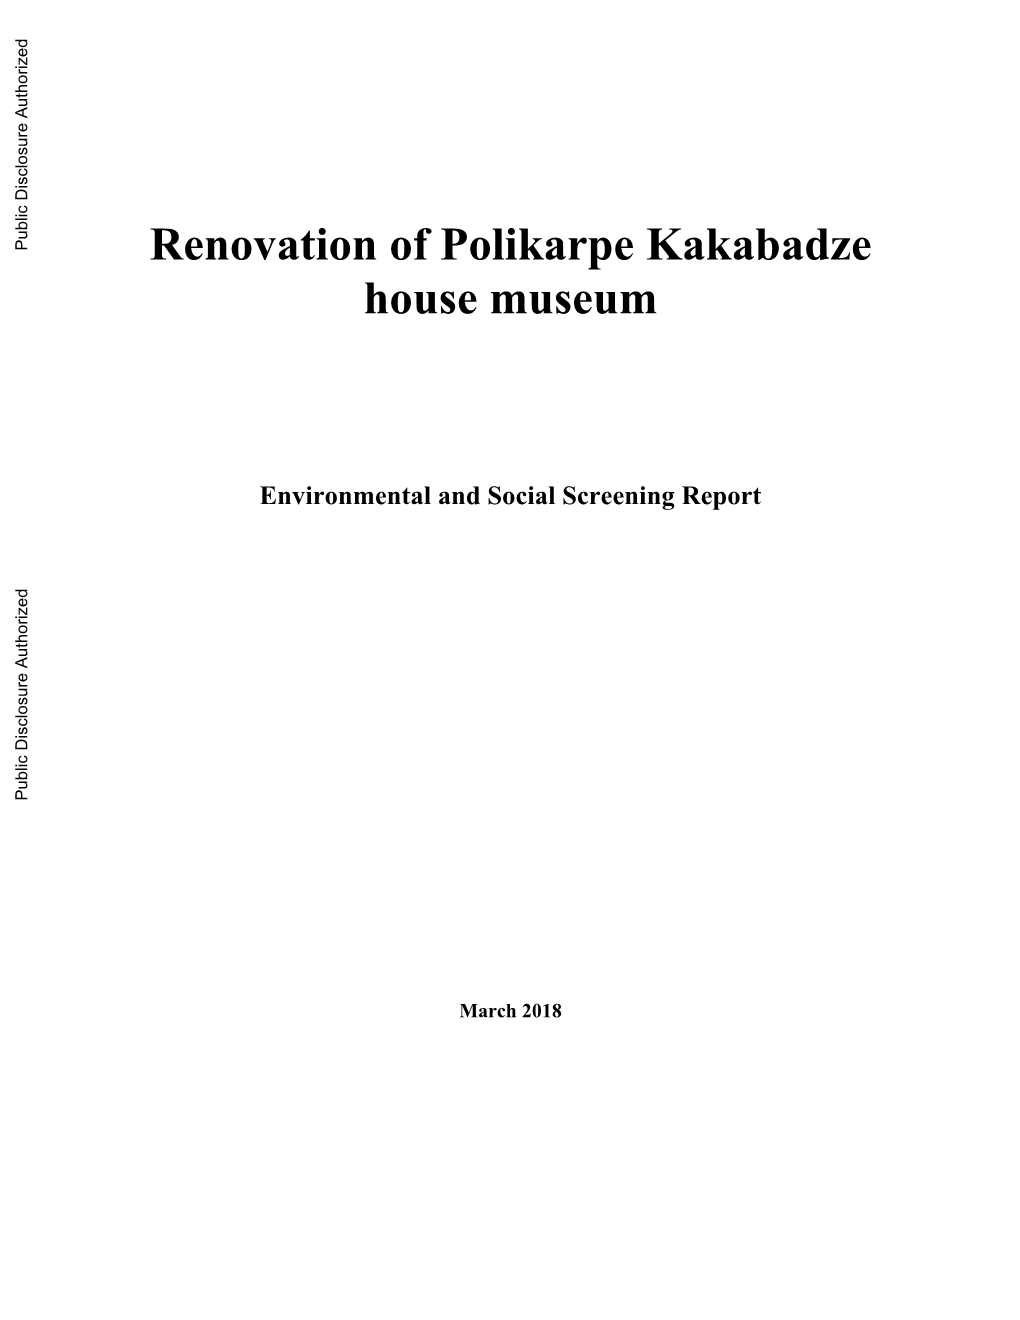 Renovation of Polikarpe Kakabadze House Museum